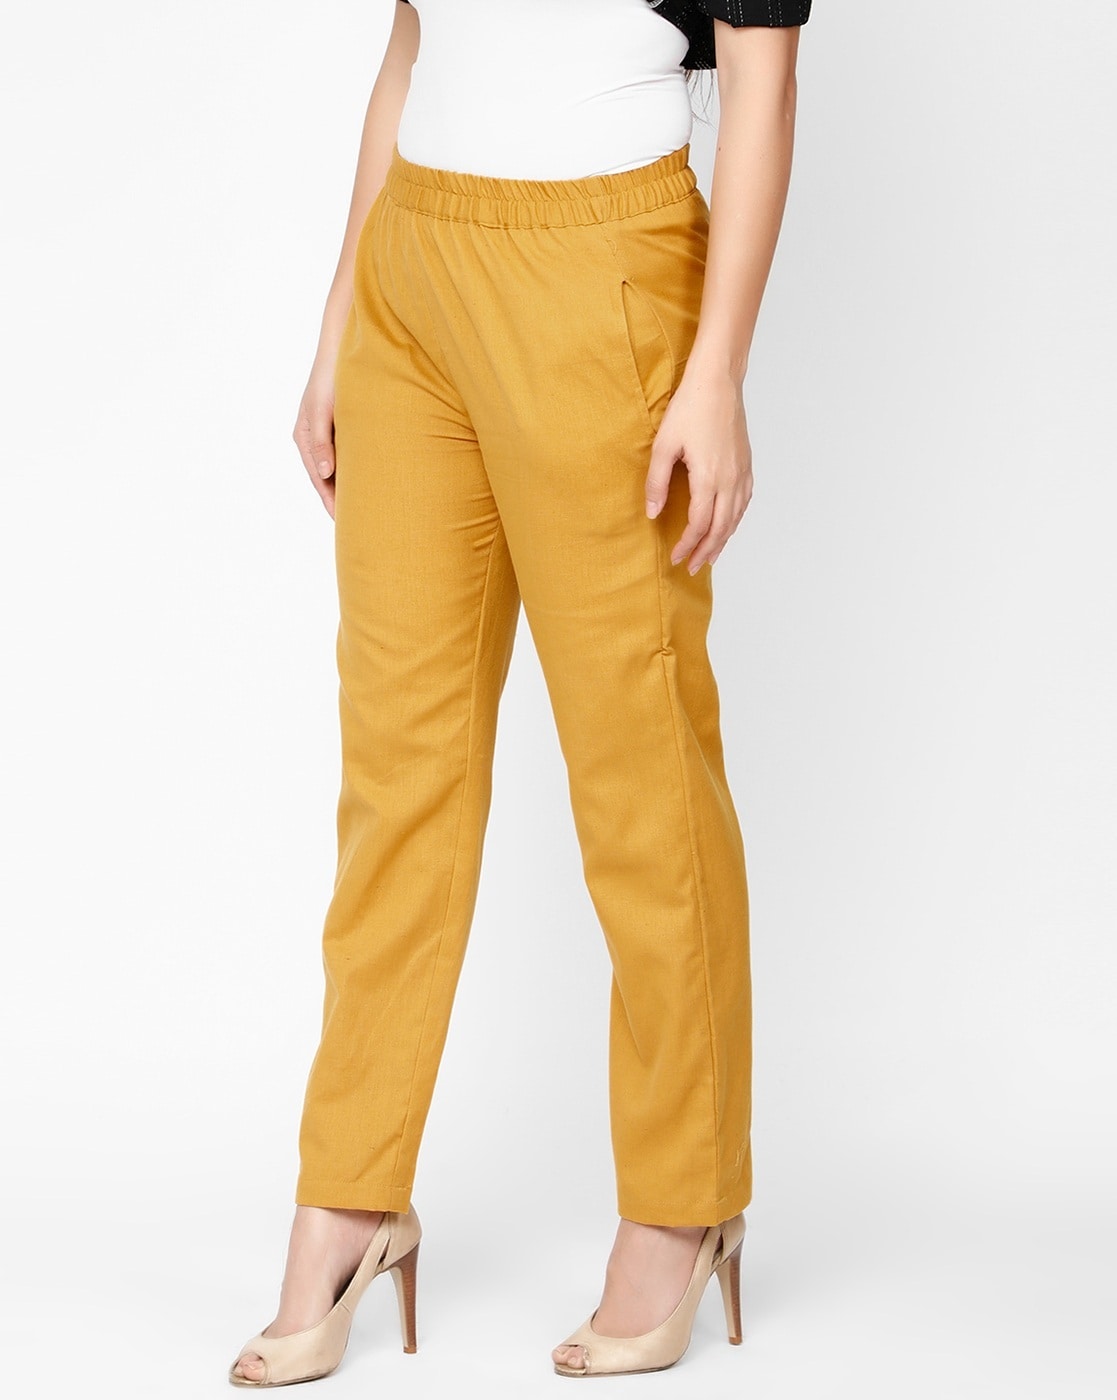 Details 79+ mustard color pants super hot